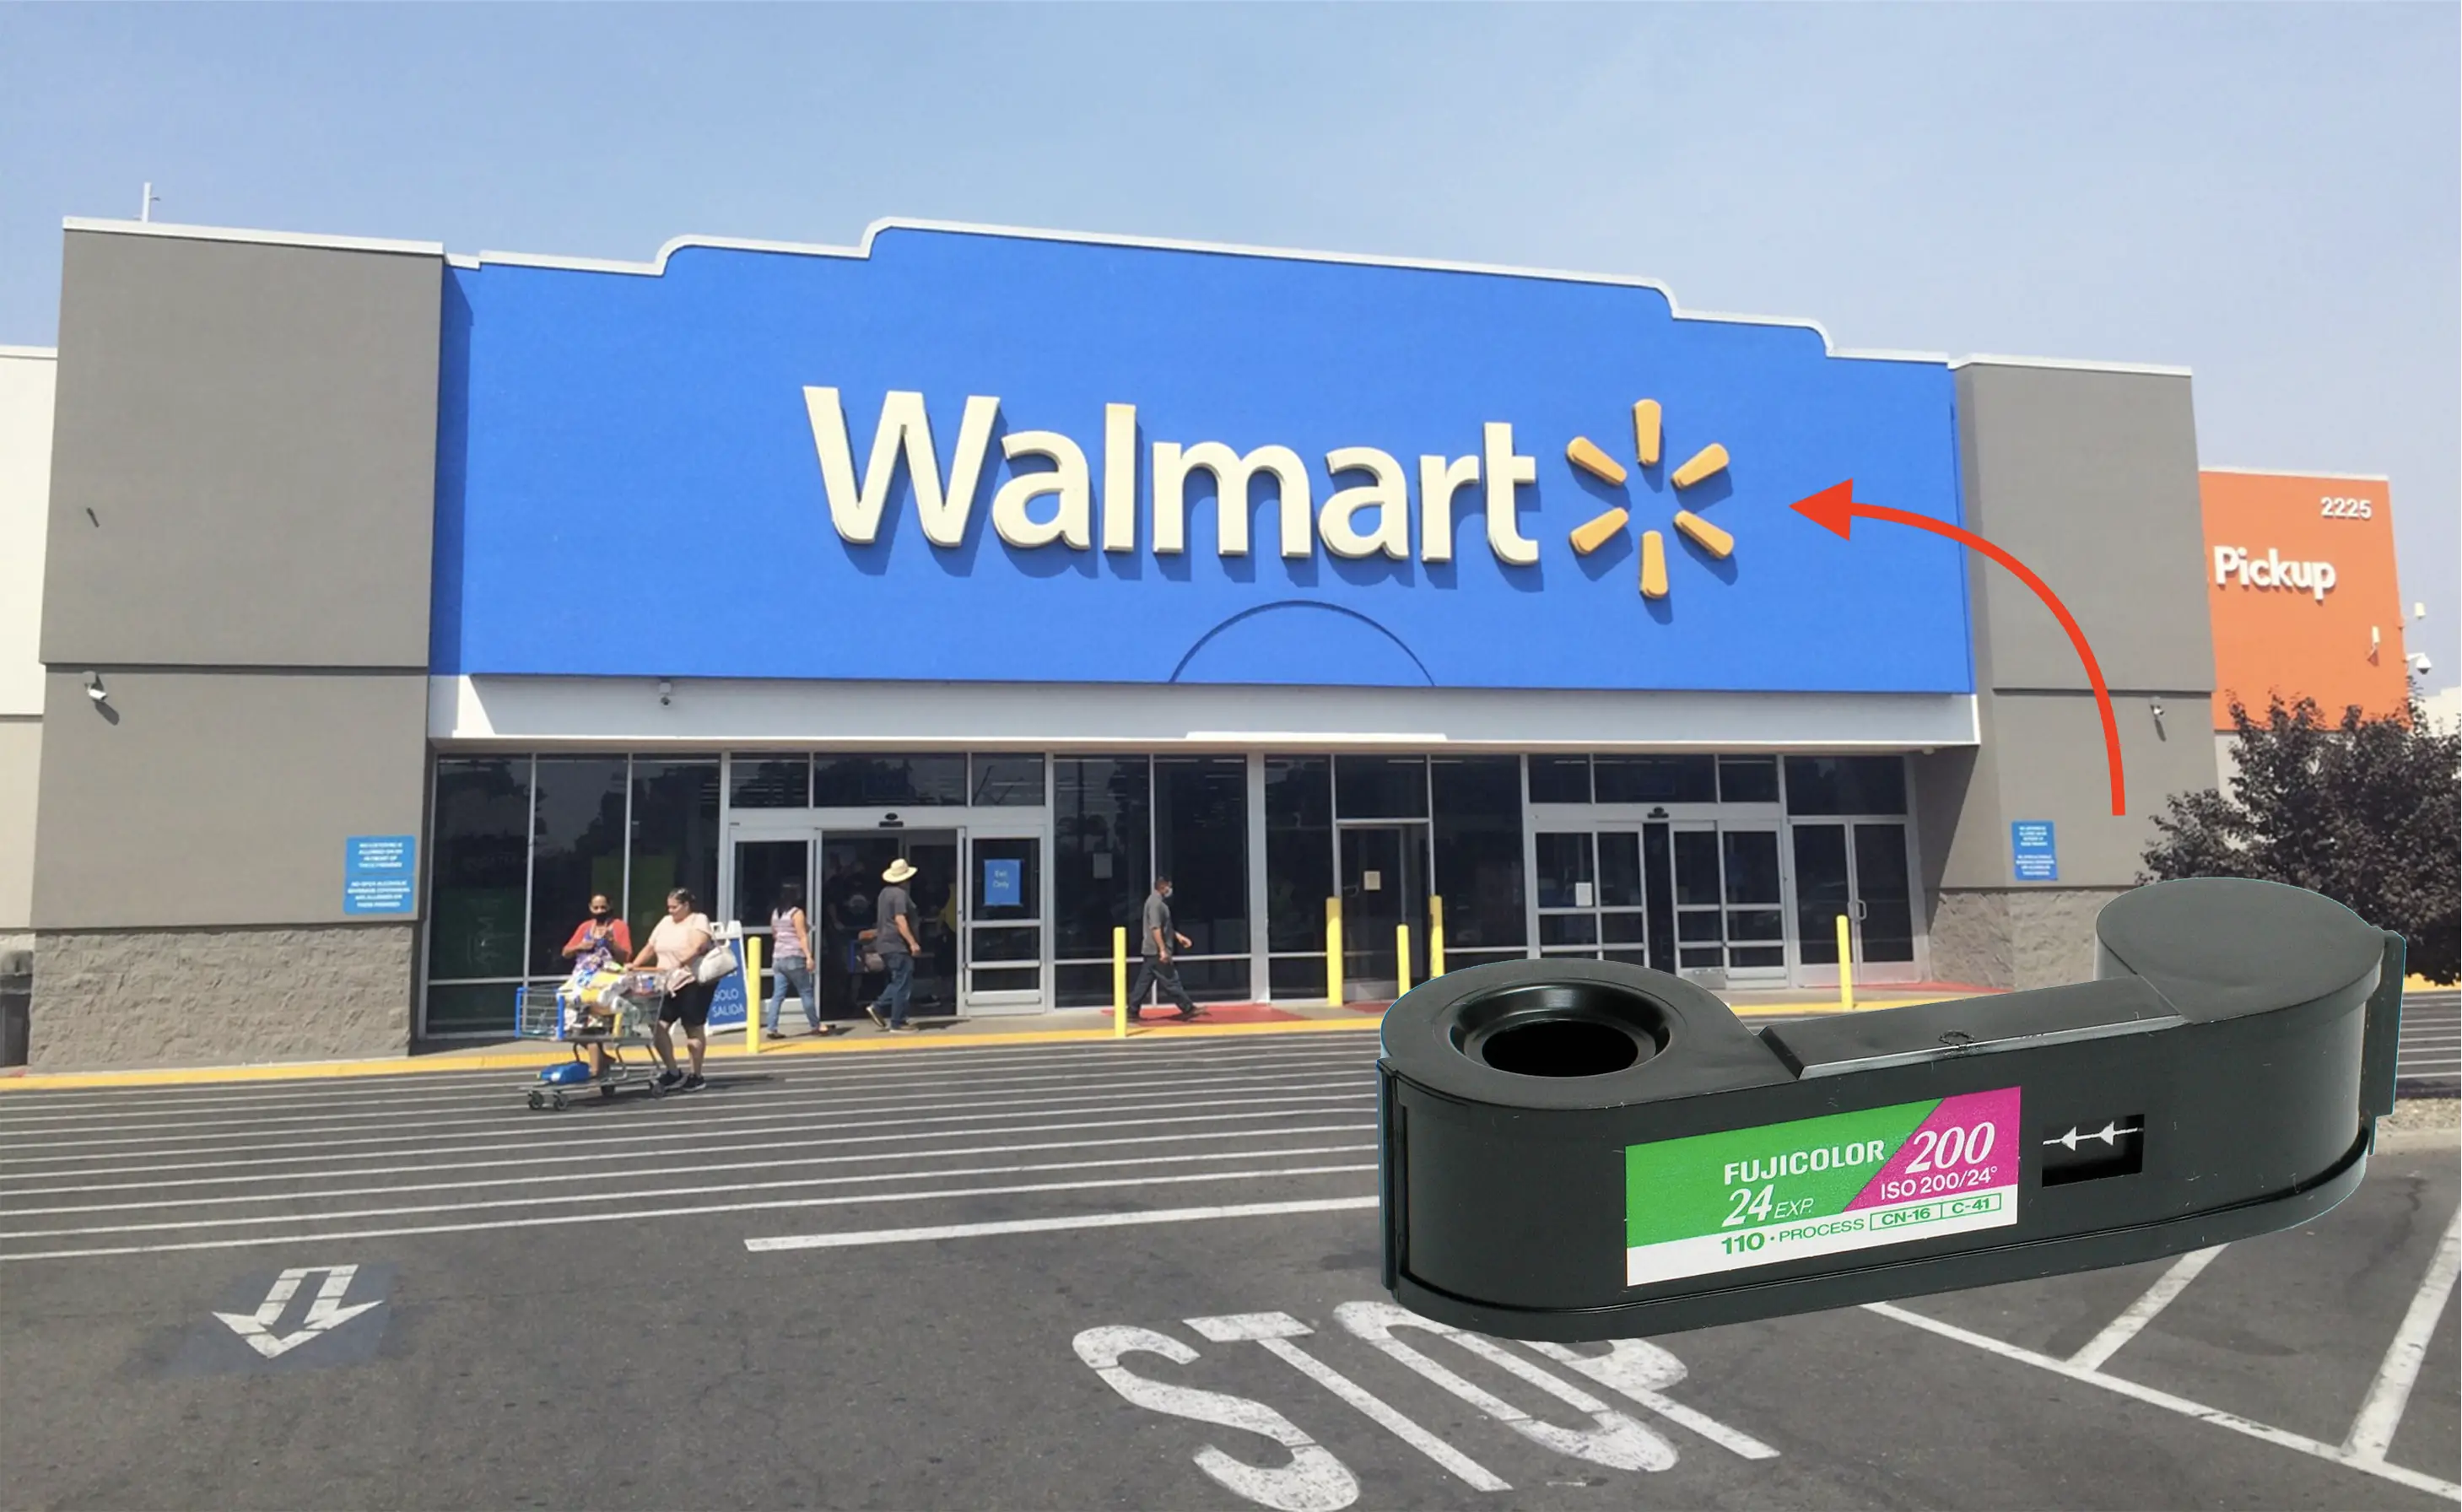 Does Walmart Process 110 Film?